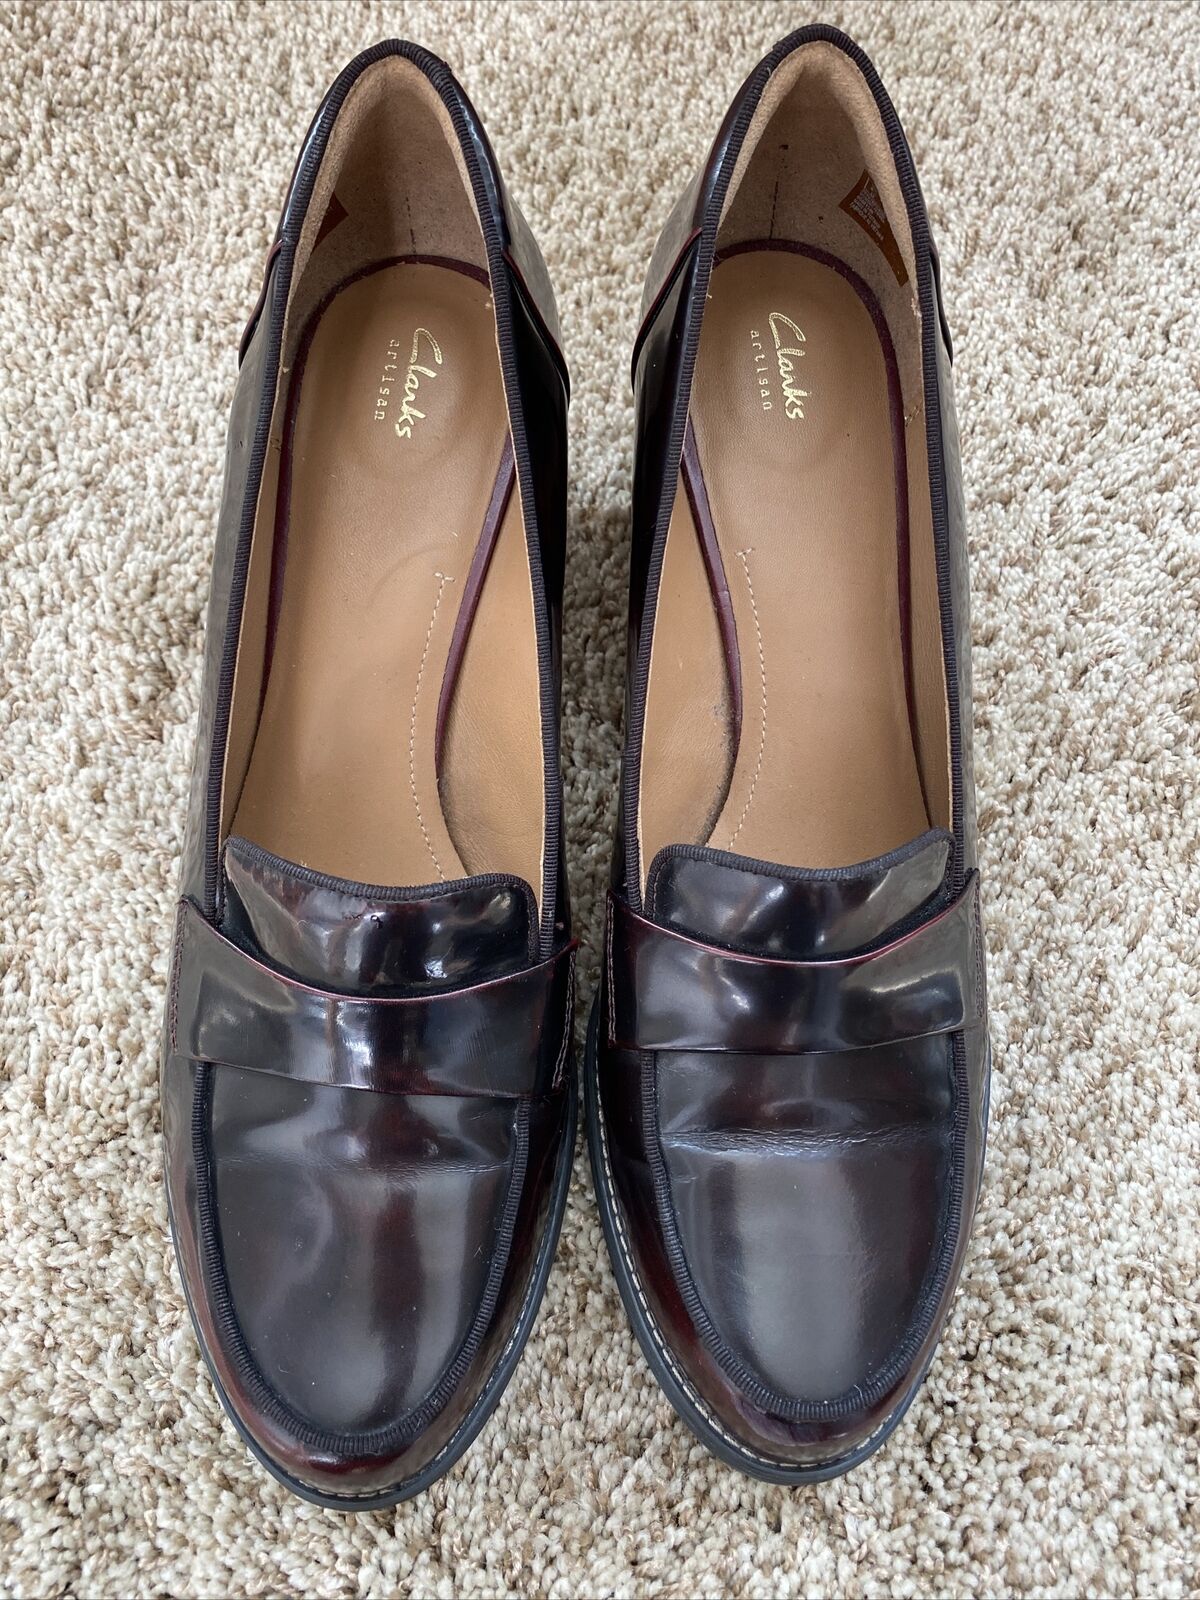 Clarks Artisan Women's Dress Slip On Heels Burgundy Leather Shoe's Size 11M